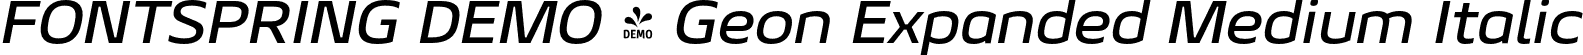 FONTSPRING DEMO - Geon Expanded Medium Italic font | Fontspring-DEMO-geonexpanded-mediumit.otf